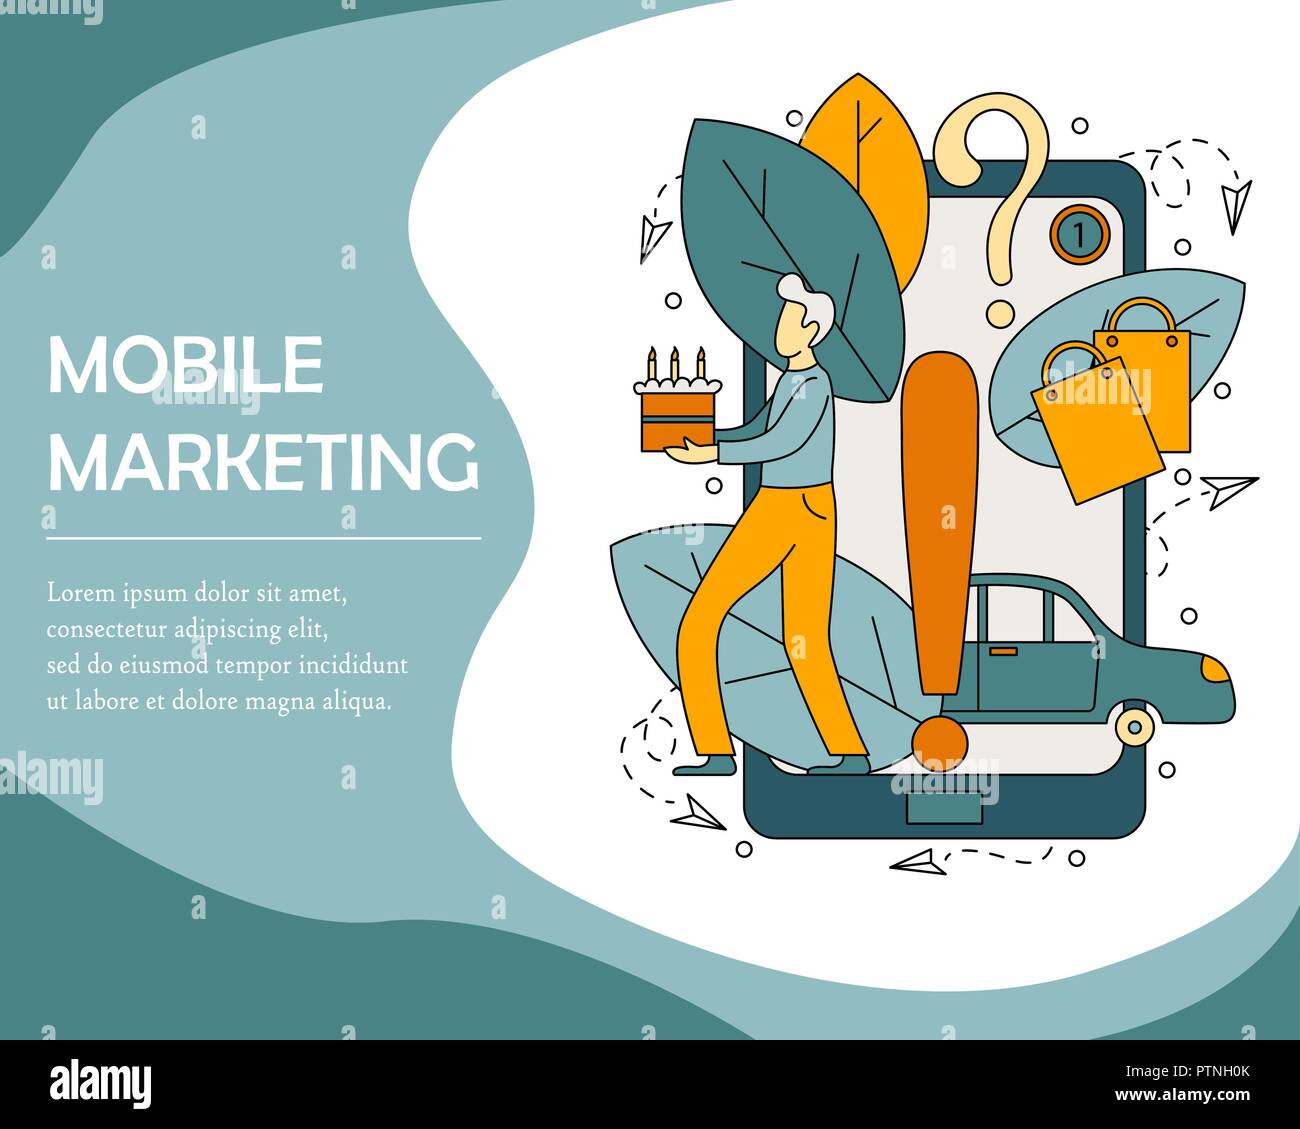 Vector illustration concept of mobile marketing. Creative flat design for web banner, marketing material, business presentation. Stock Vector